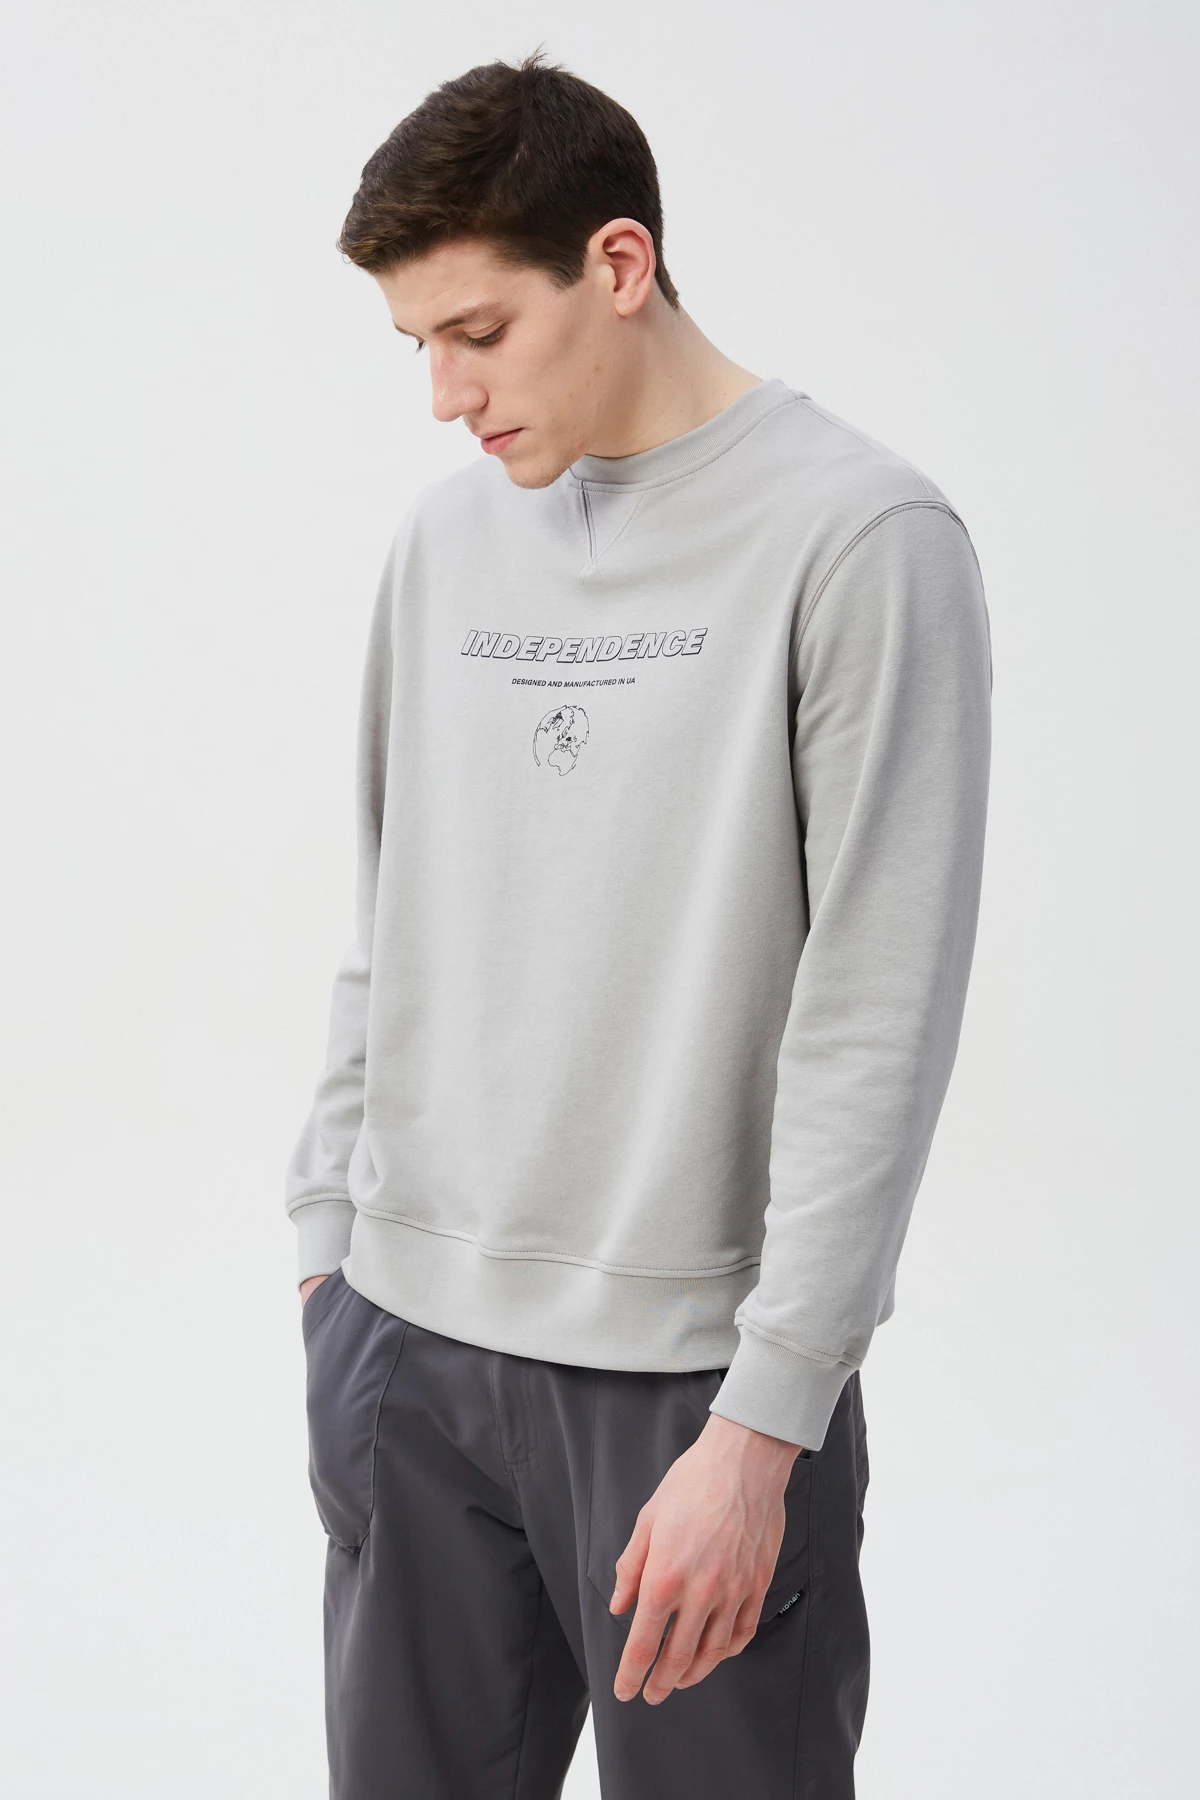 Grey unisex sweatshirt with "Independence" print, photo 7